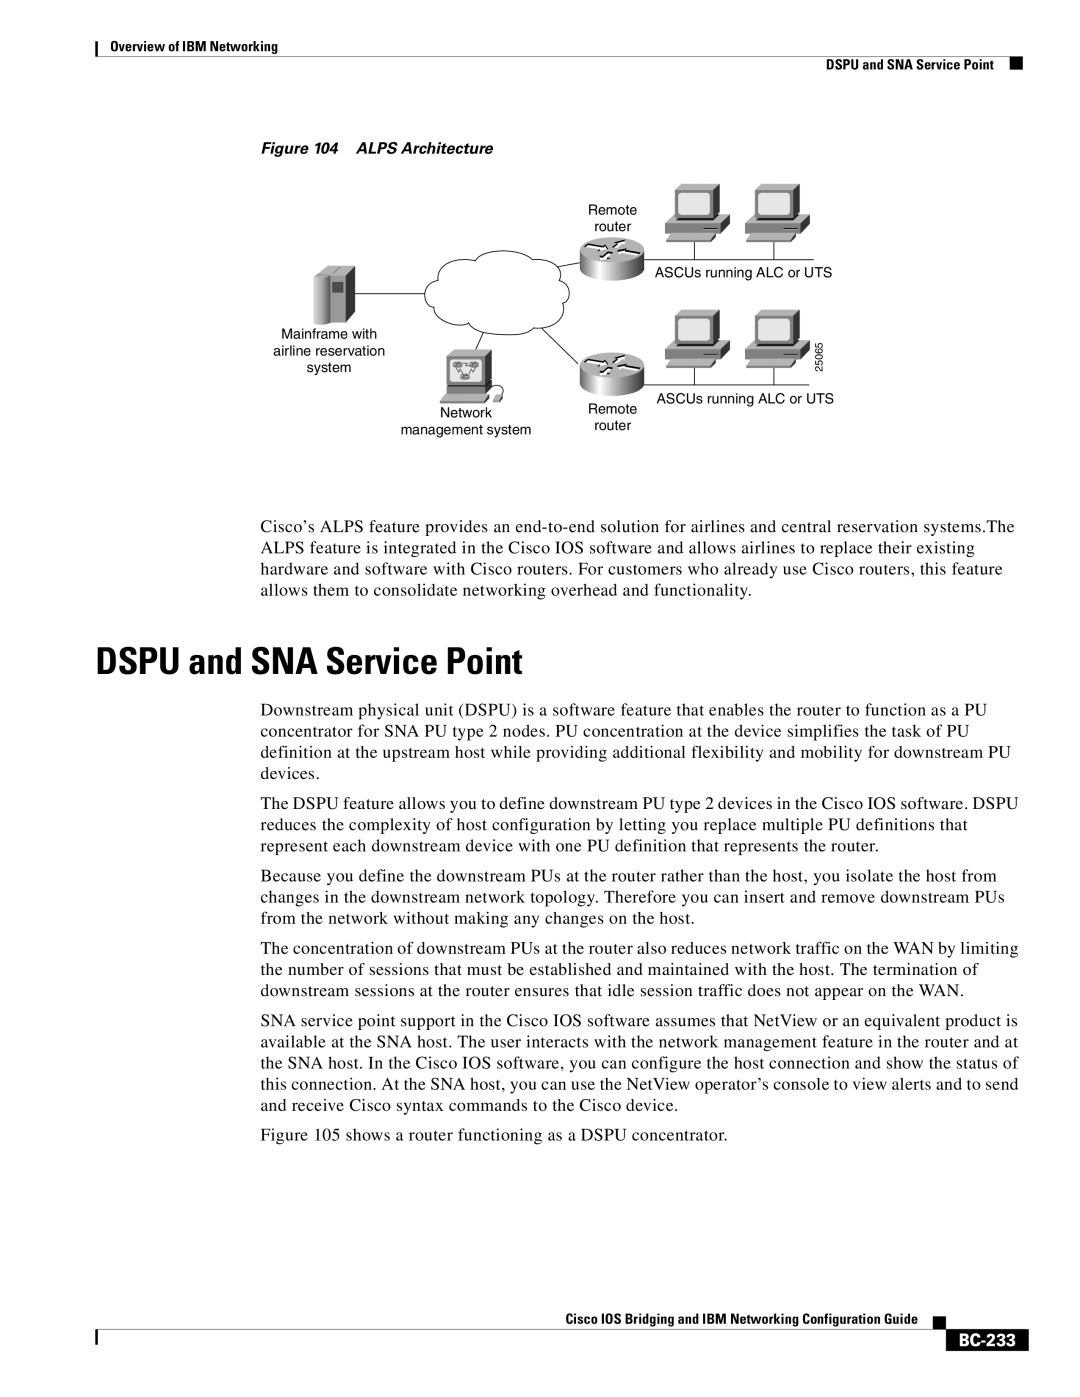 IBM BC-203 manual DSPU and SNA Service Point, BC-233 